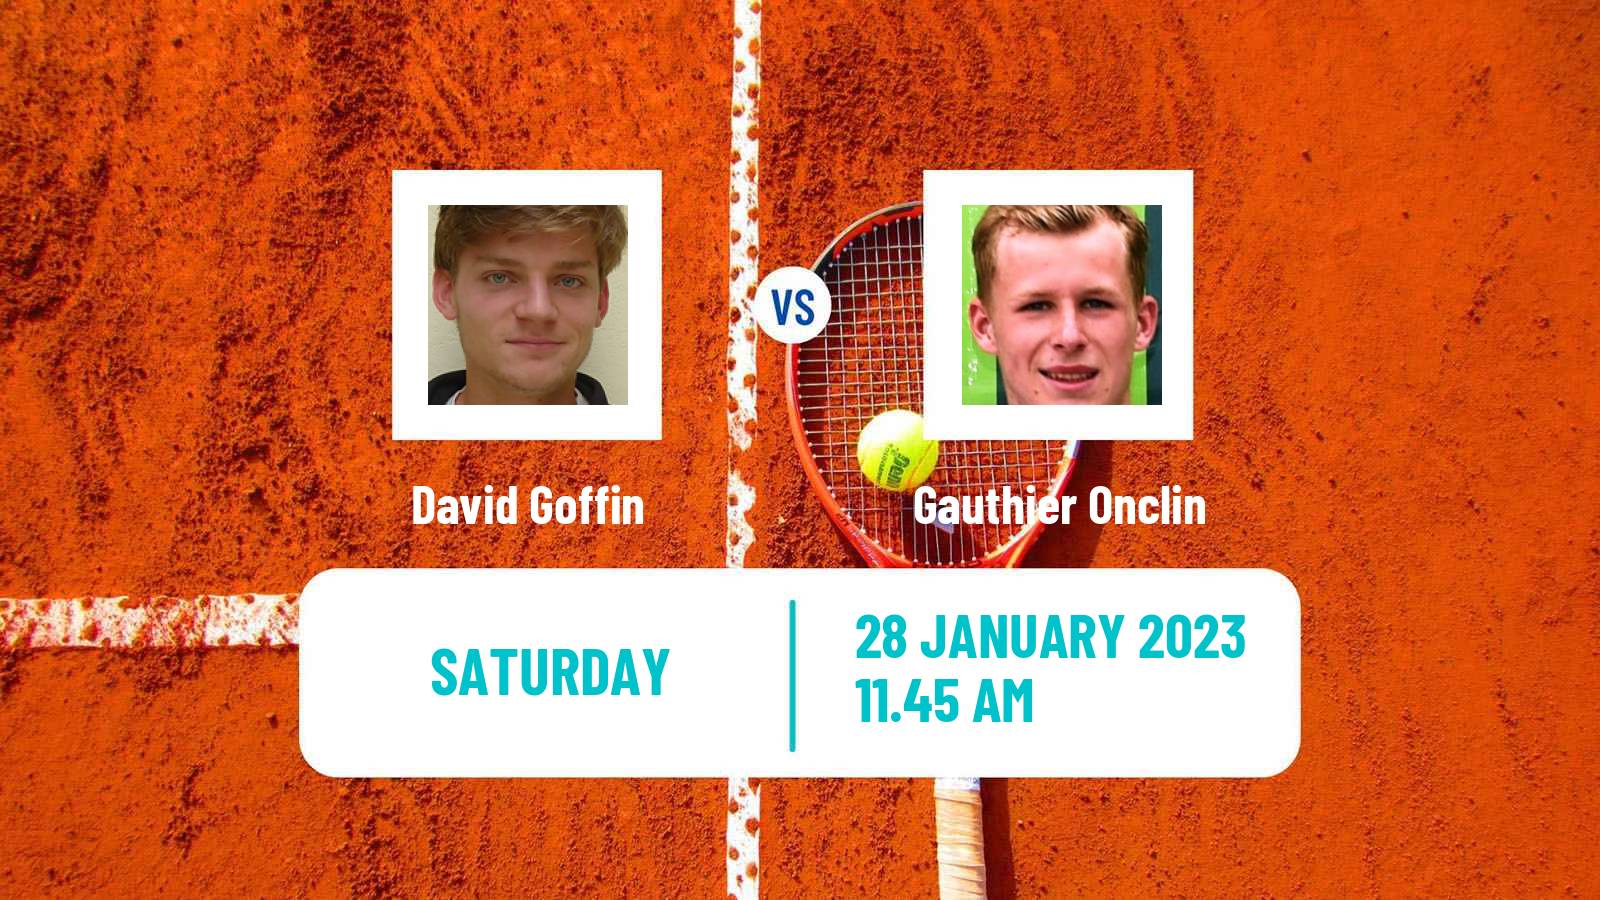 Tennis ATP Challenger David Goffin - Gauthier Onclin